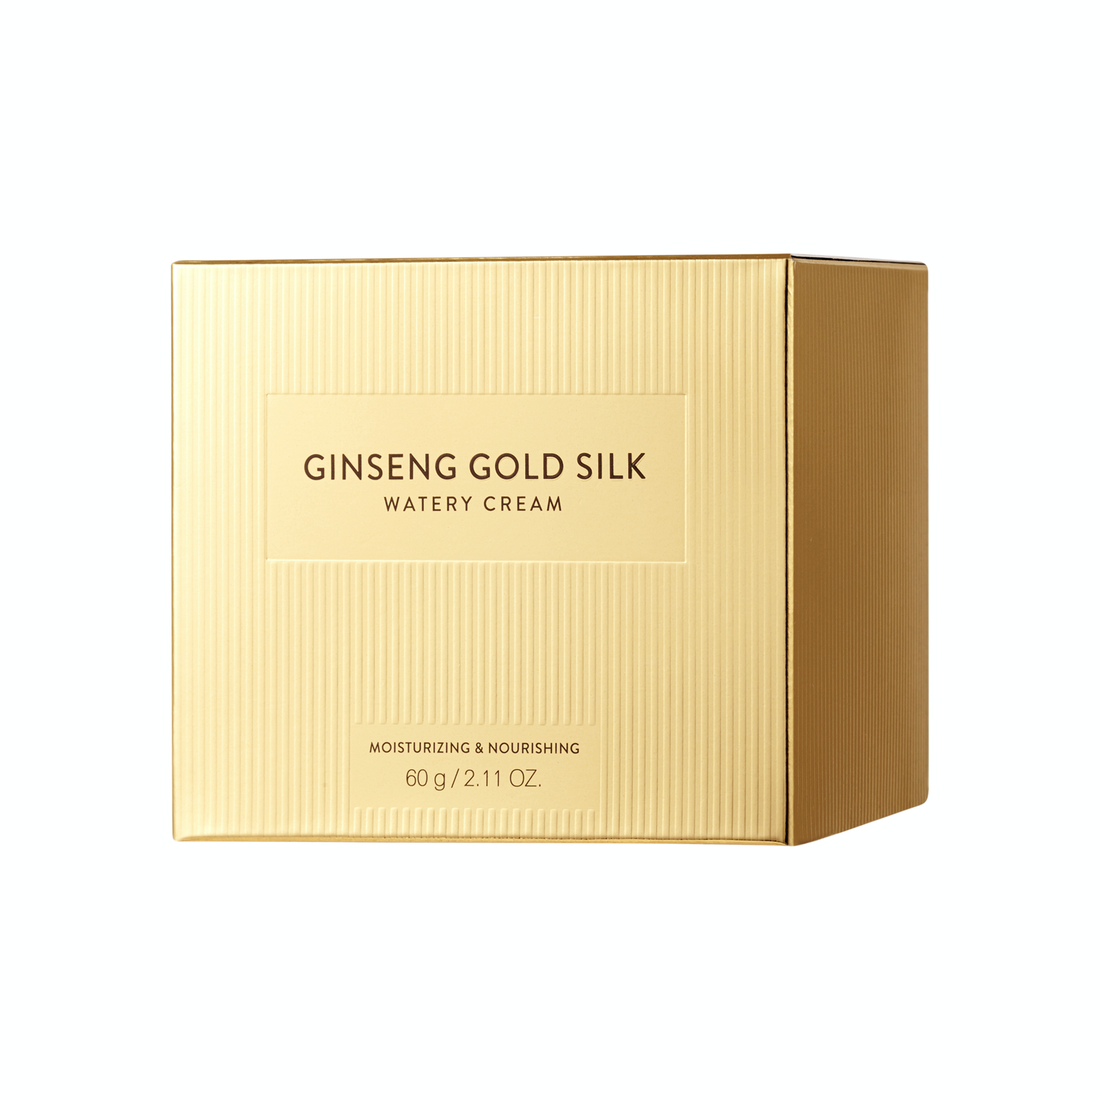 [2x][THE BEGINNING OF A GOLDEN MIRACLE] Ginseng Gold Silk Watery Cream